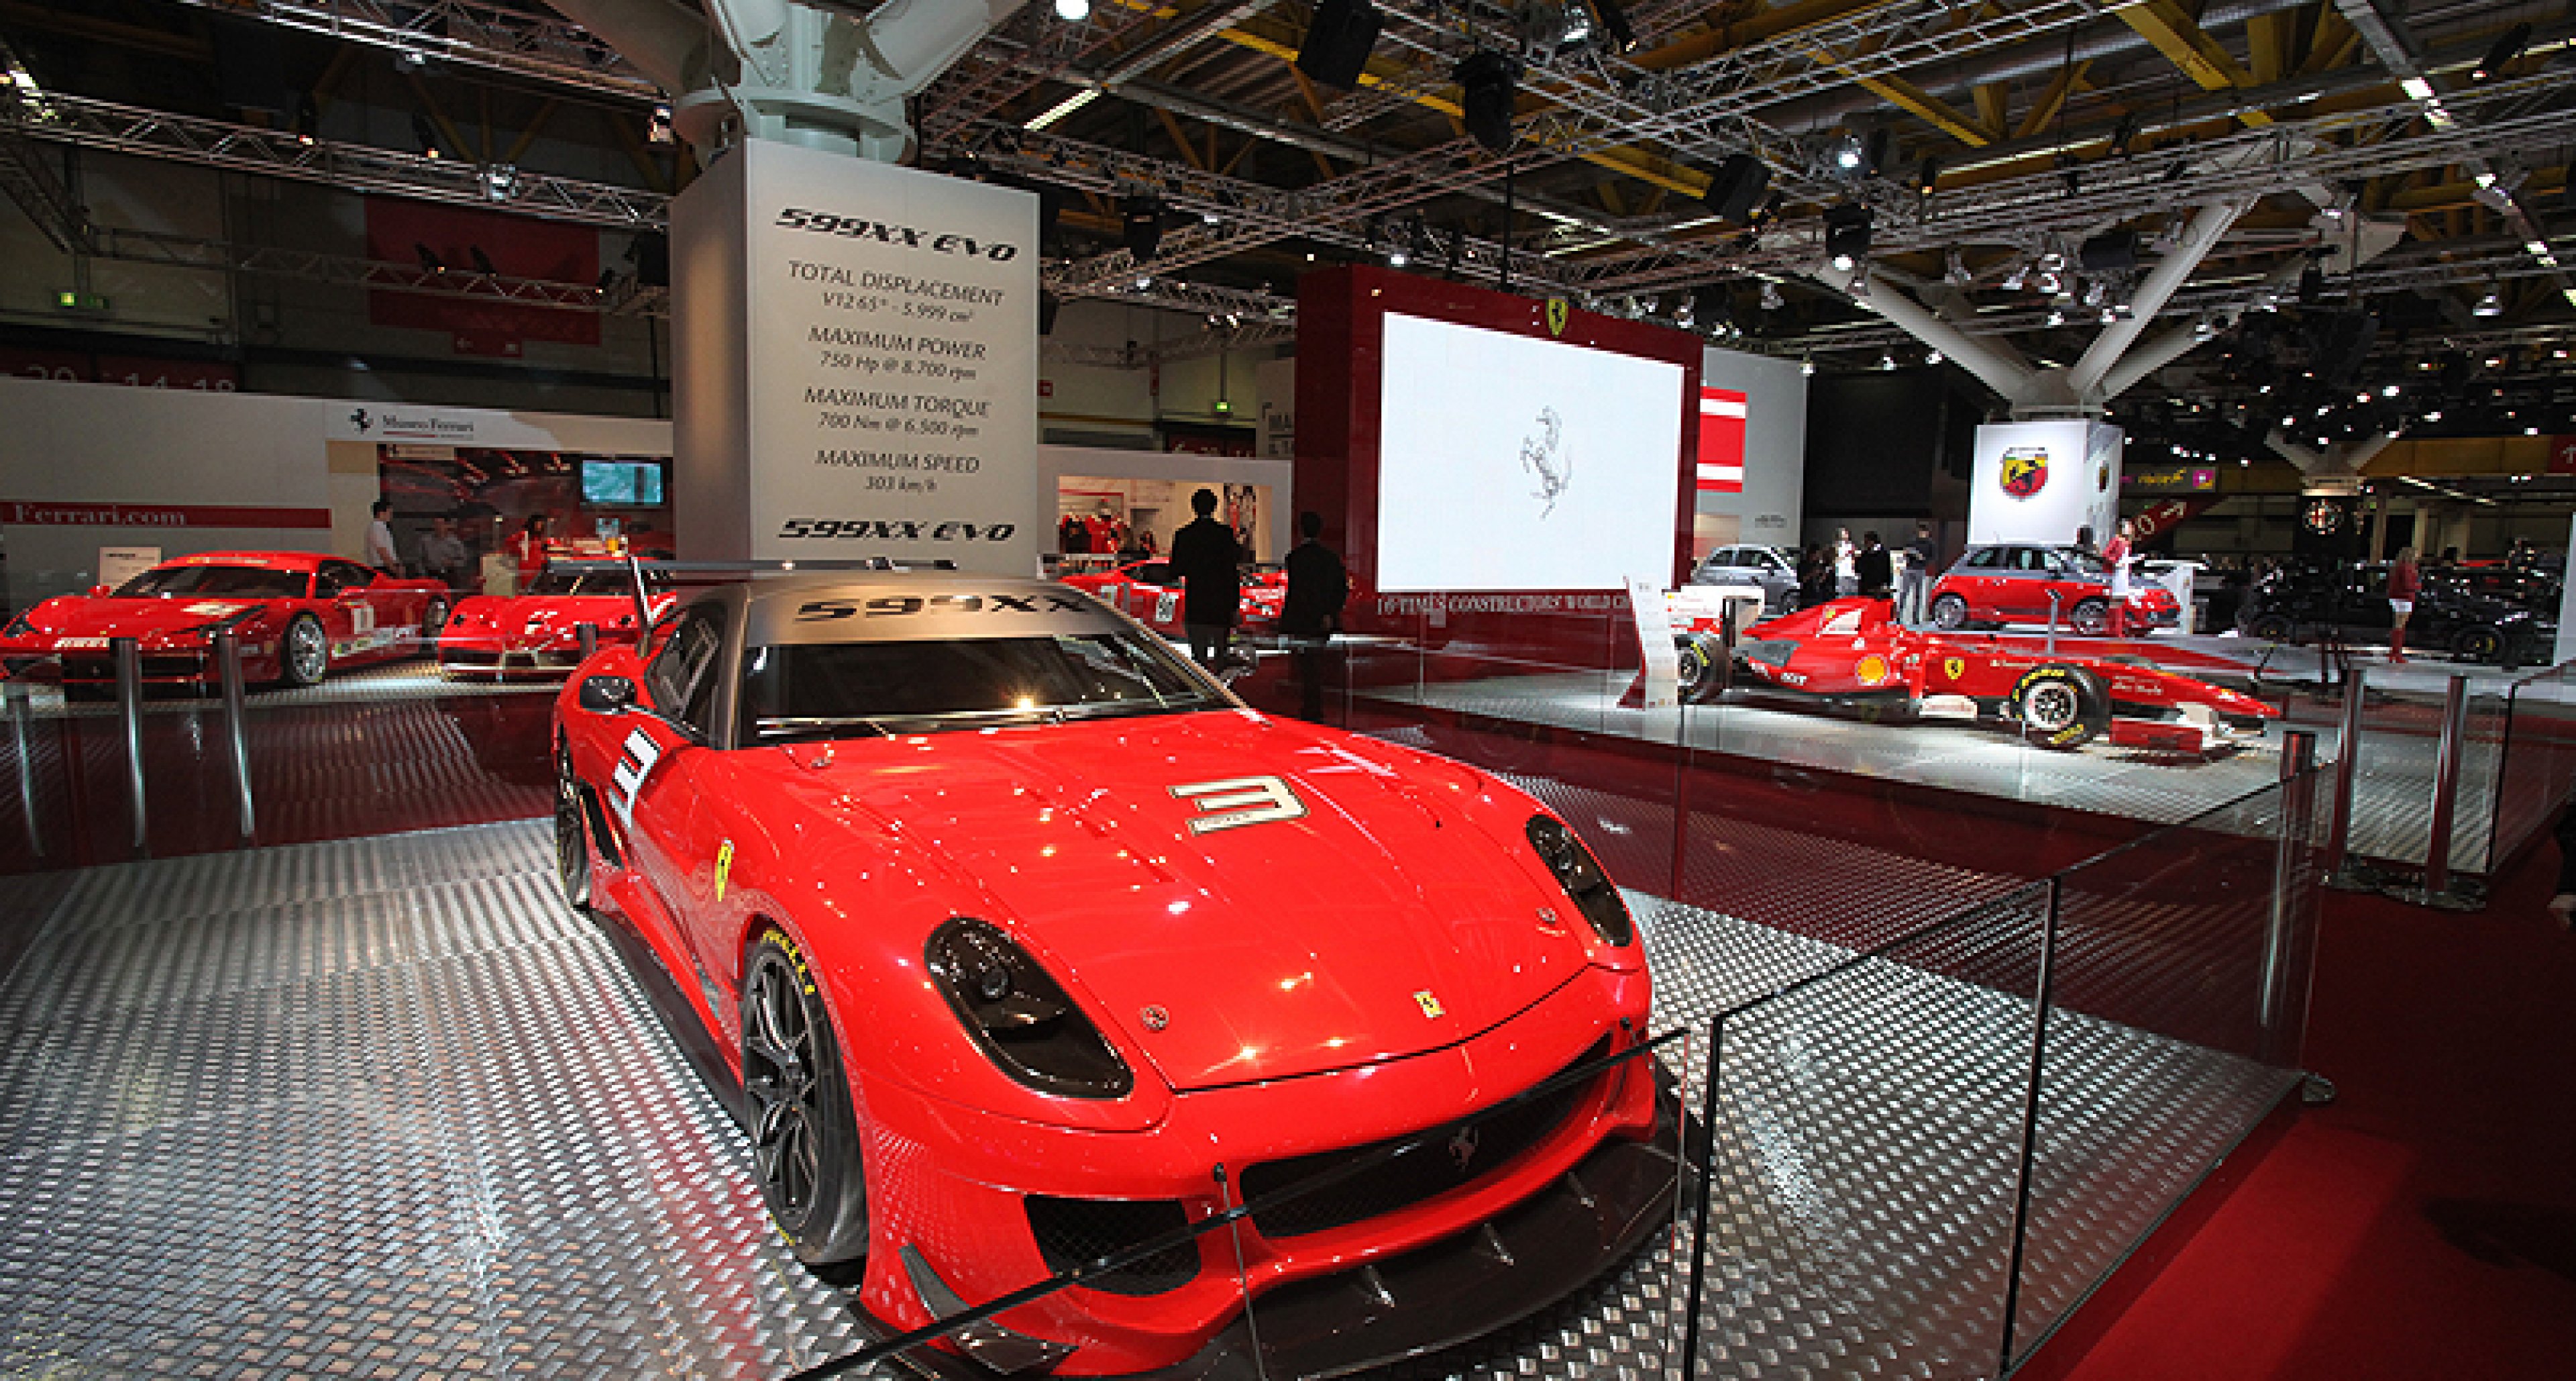 Ferrari 599XX Evolution: The best got better